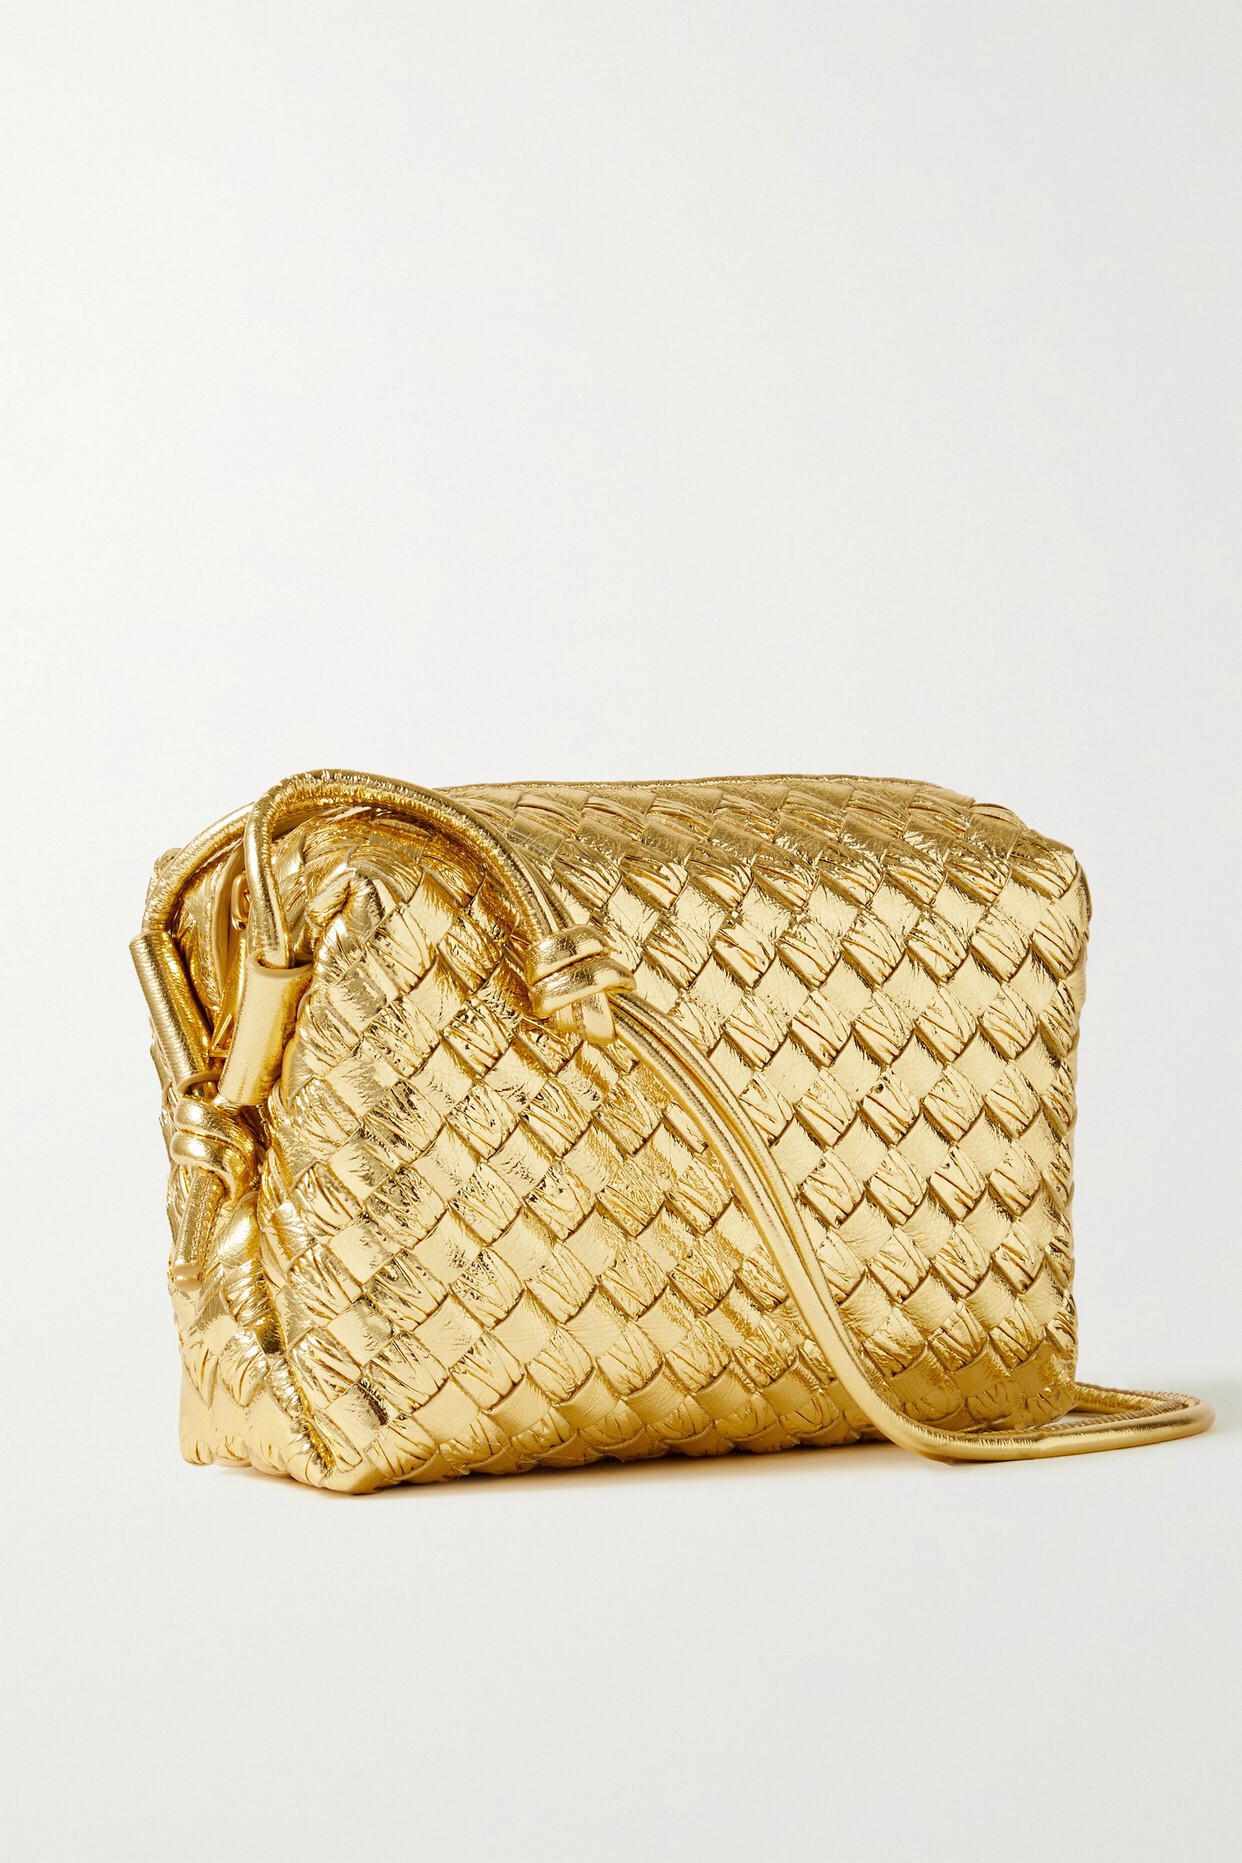 Bottega Veneta - Loop Intrecciato Metallic Crinkled-leather Shoulder Bag - Gold